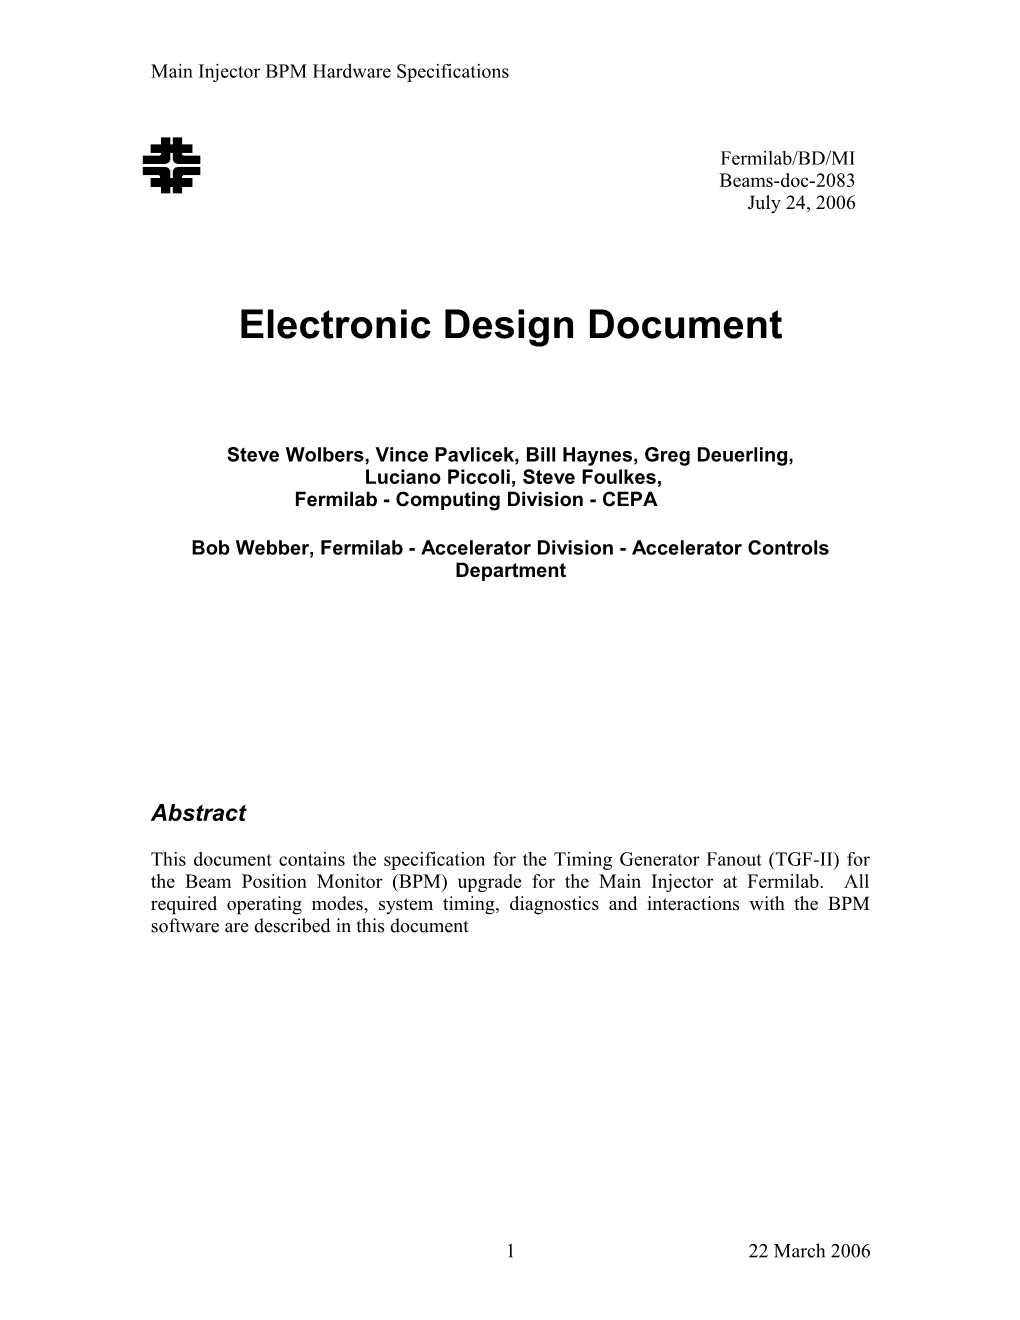 Electronic Design Document